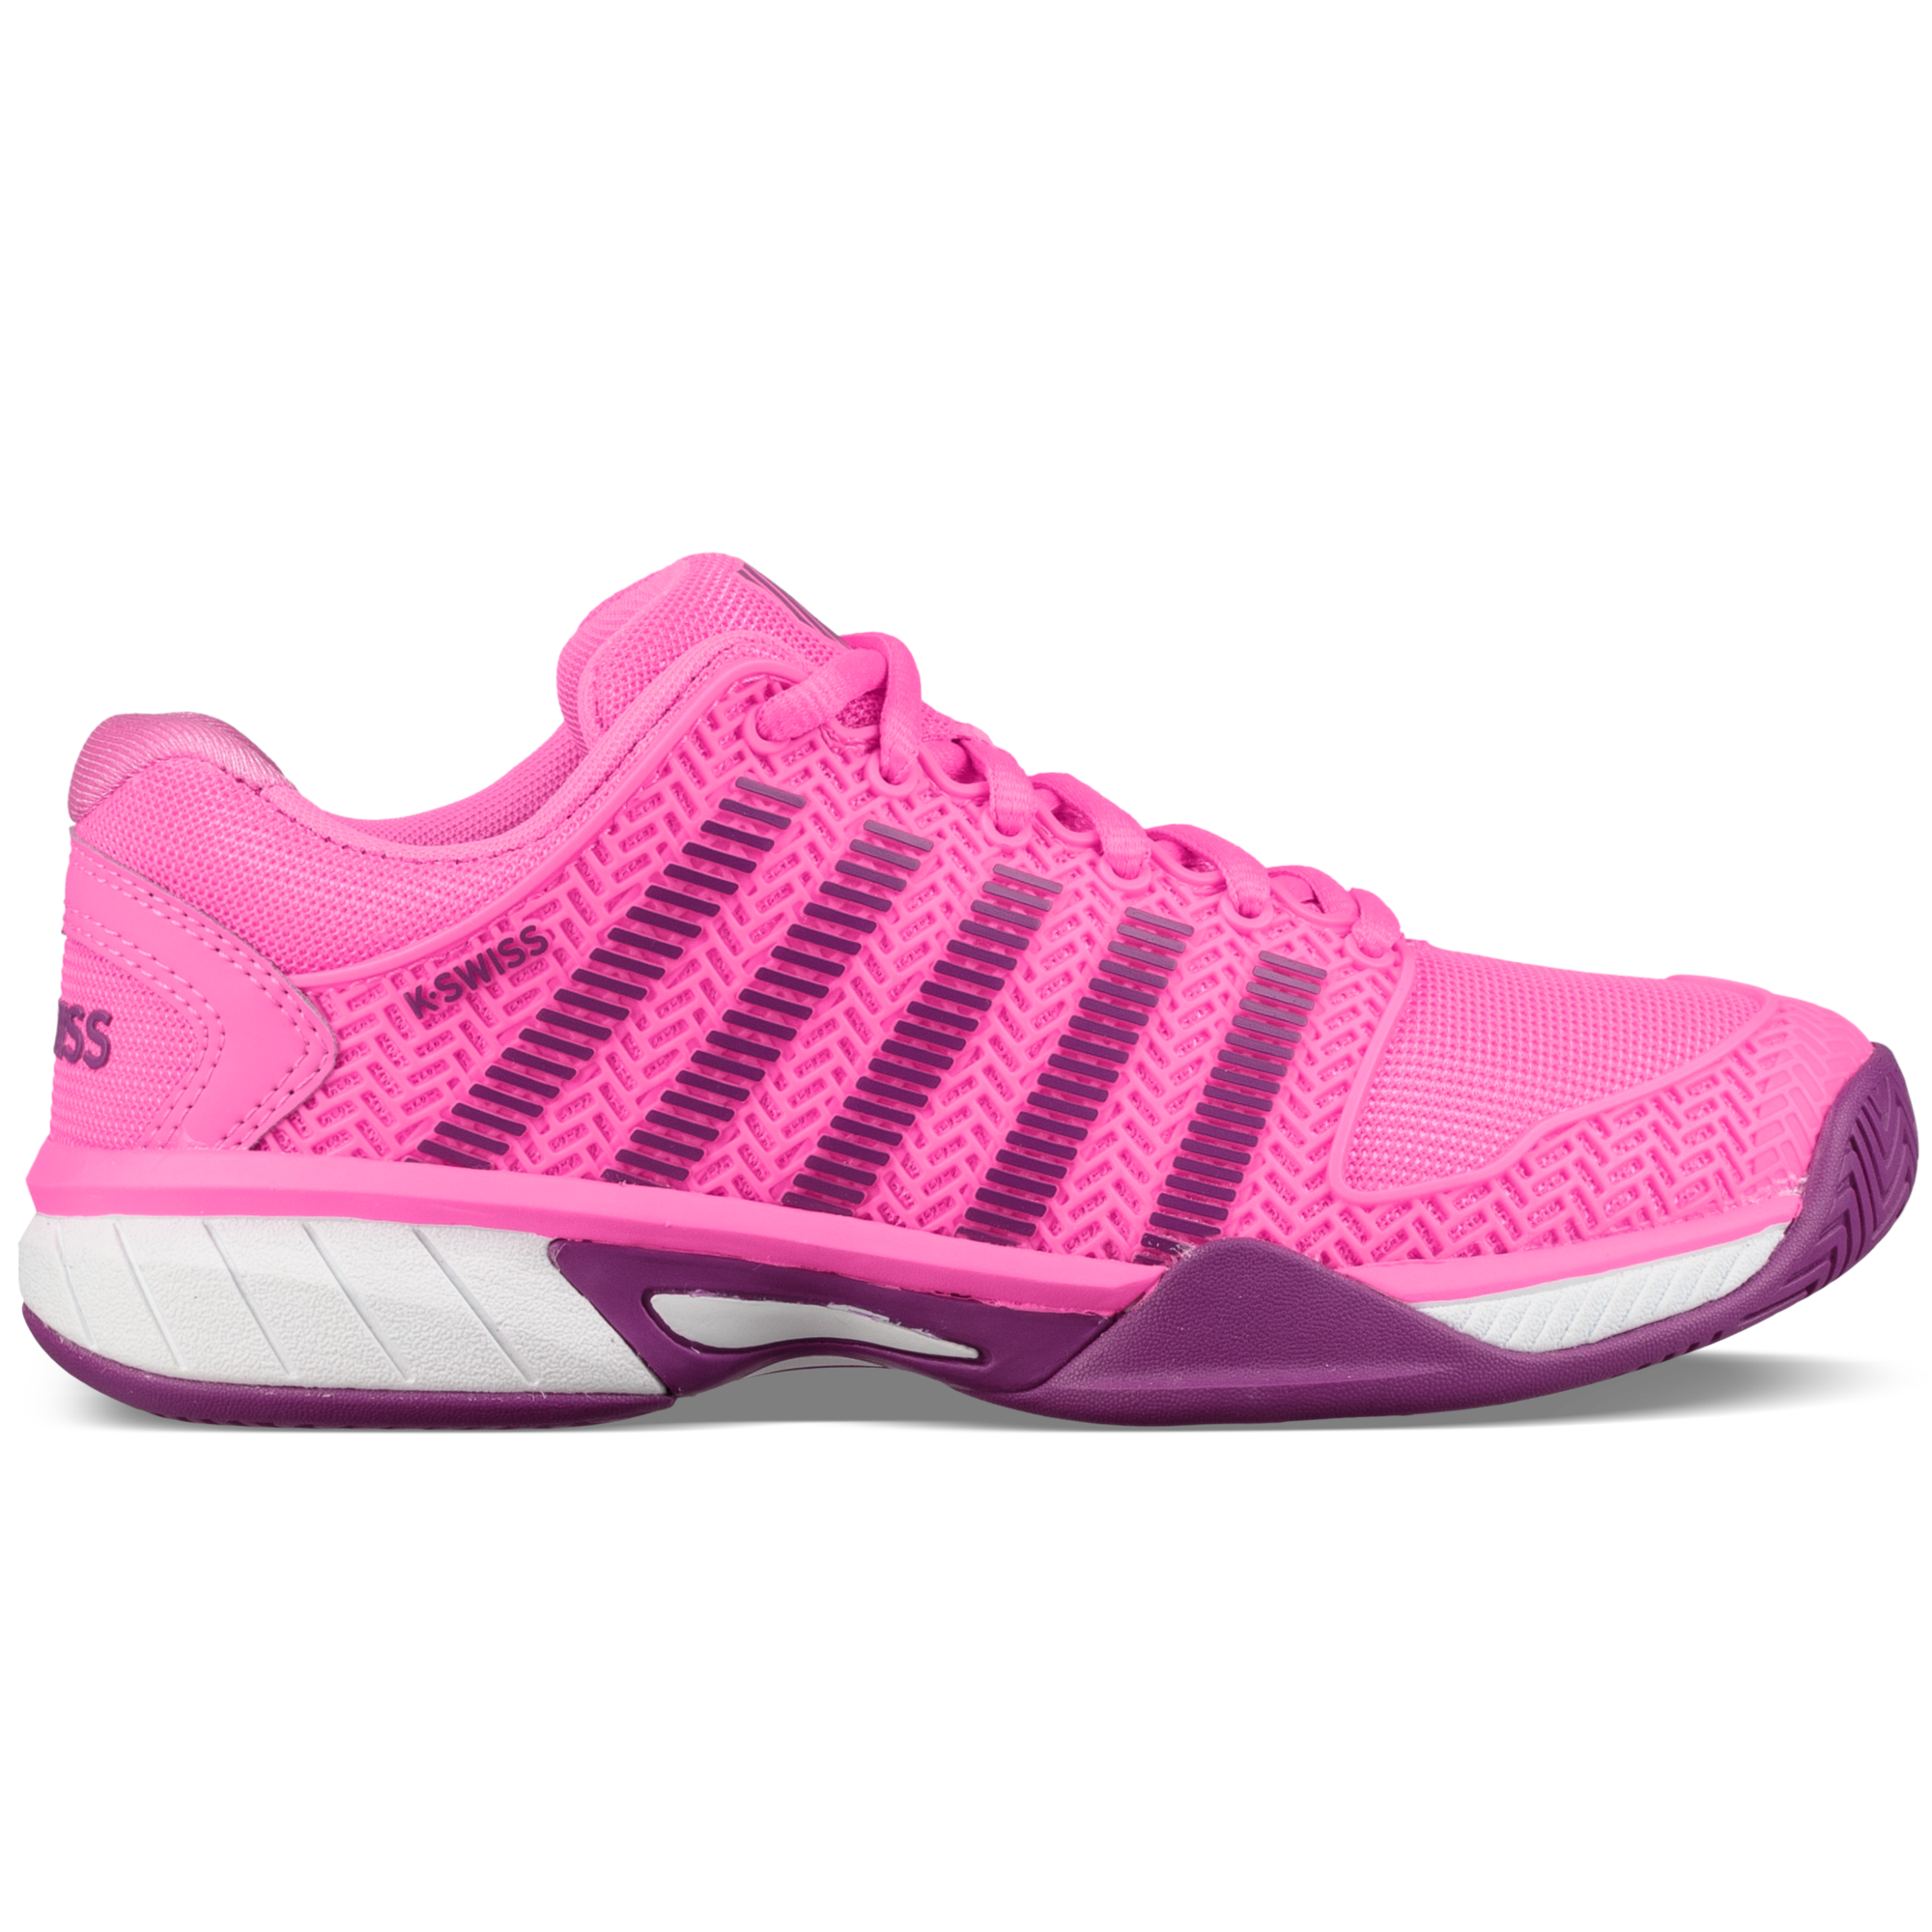 pink k swiss tennis shoes